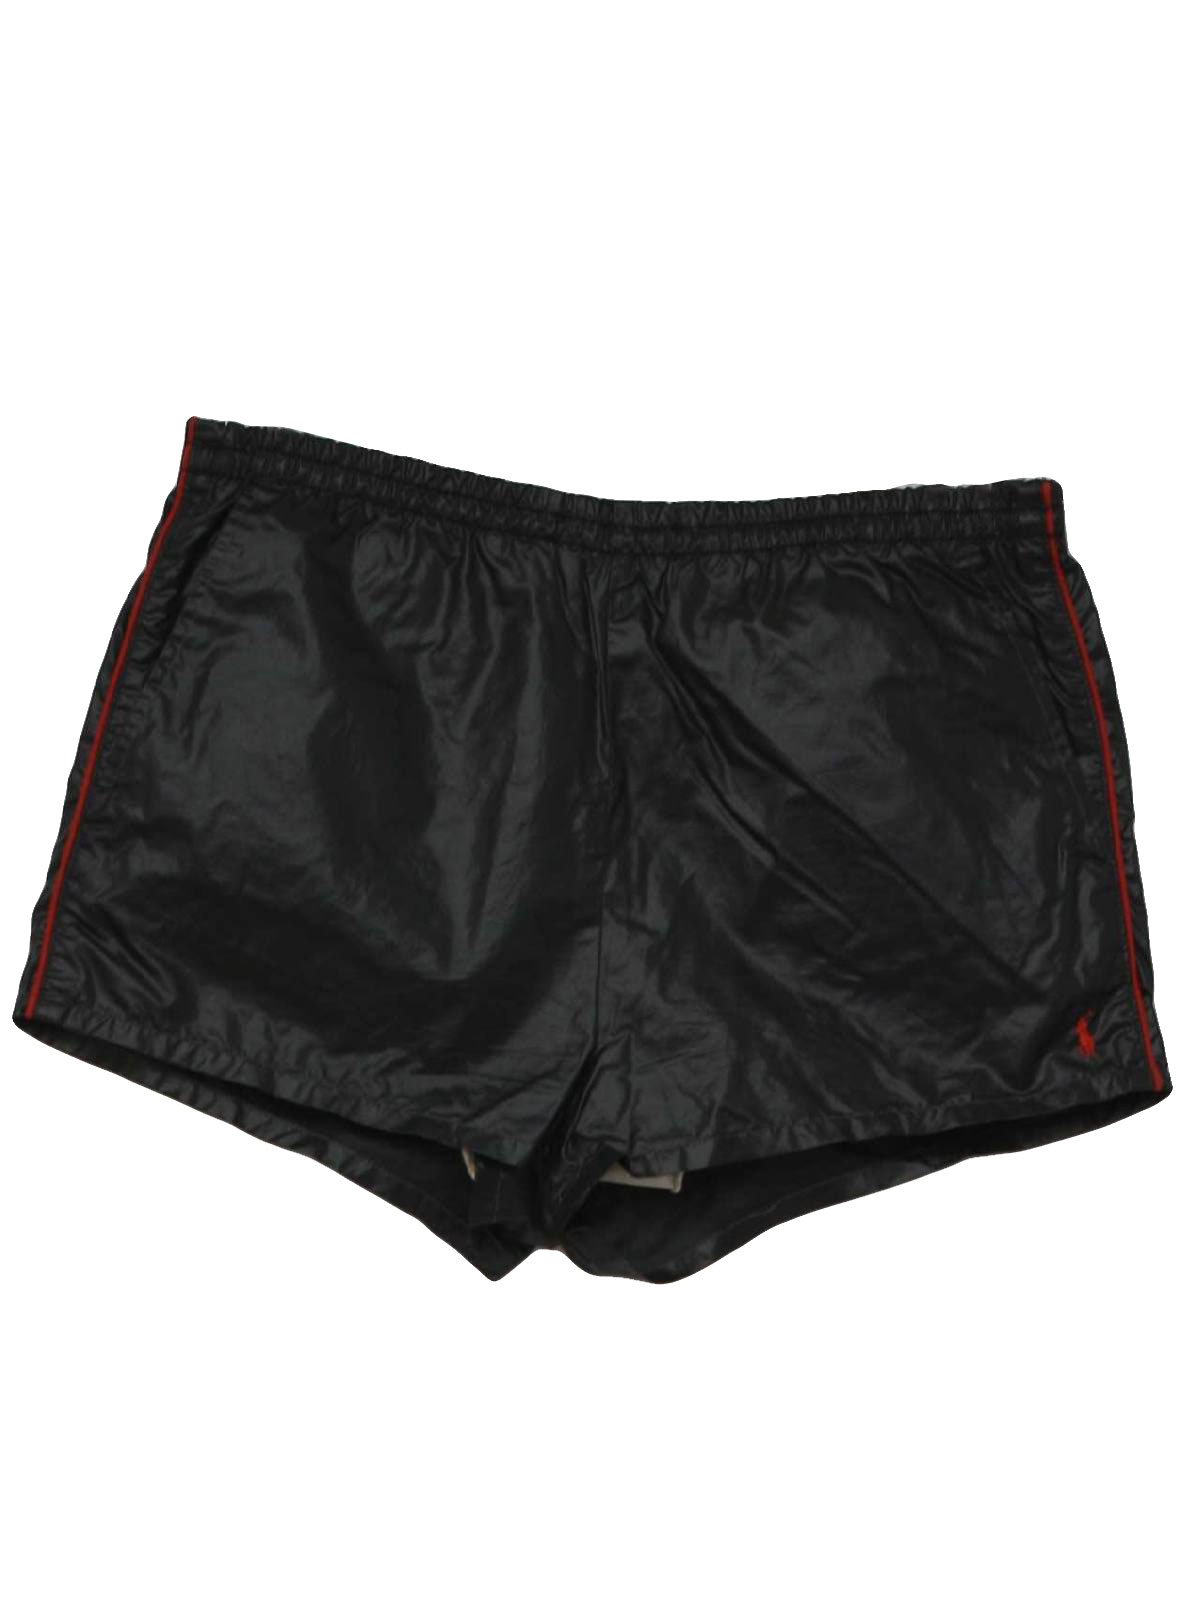 Nineties Vintage Shorts: 90s -Polo Ralph Lauren- Mens shiny black ...